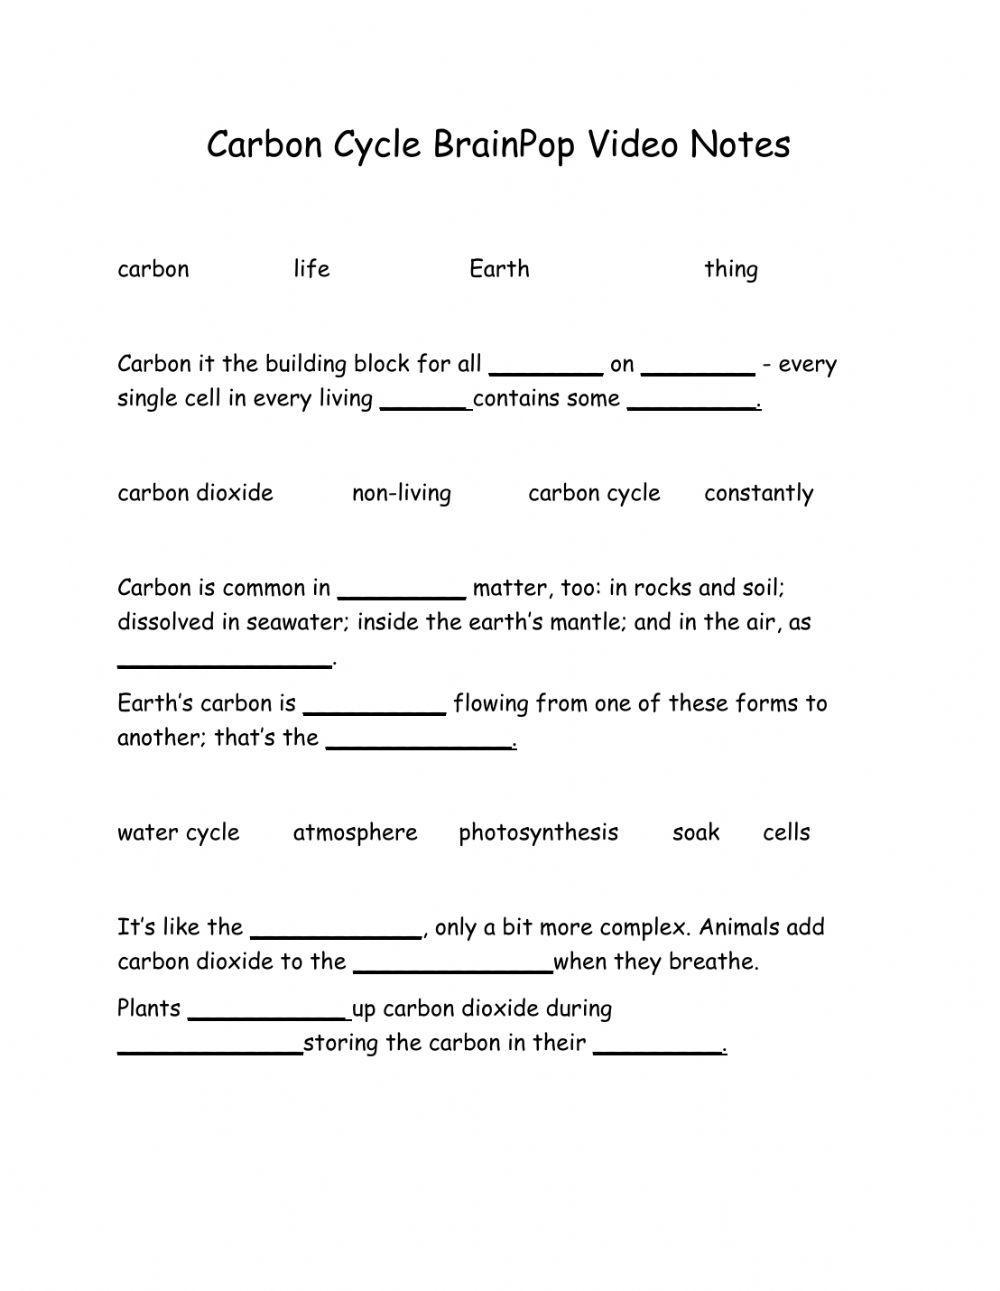 Carbon Cycle BrainPop Video Notes